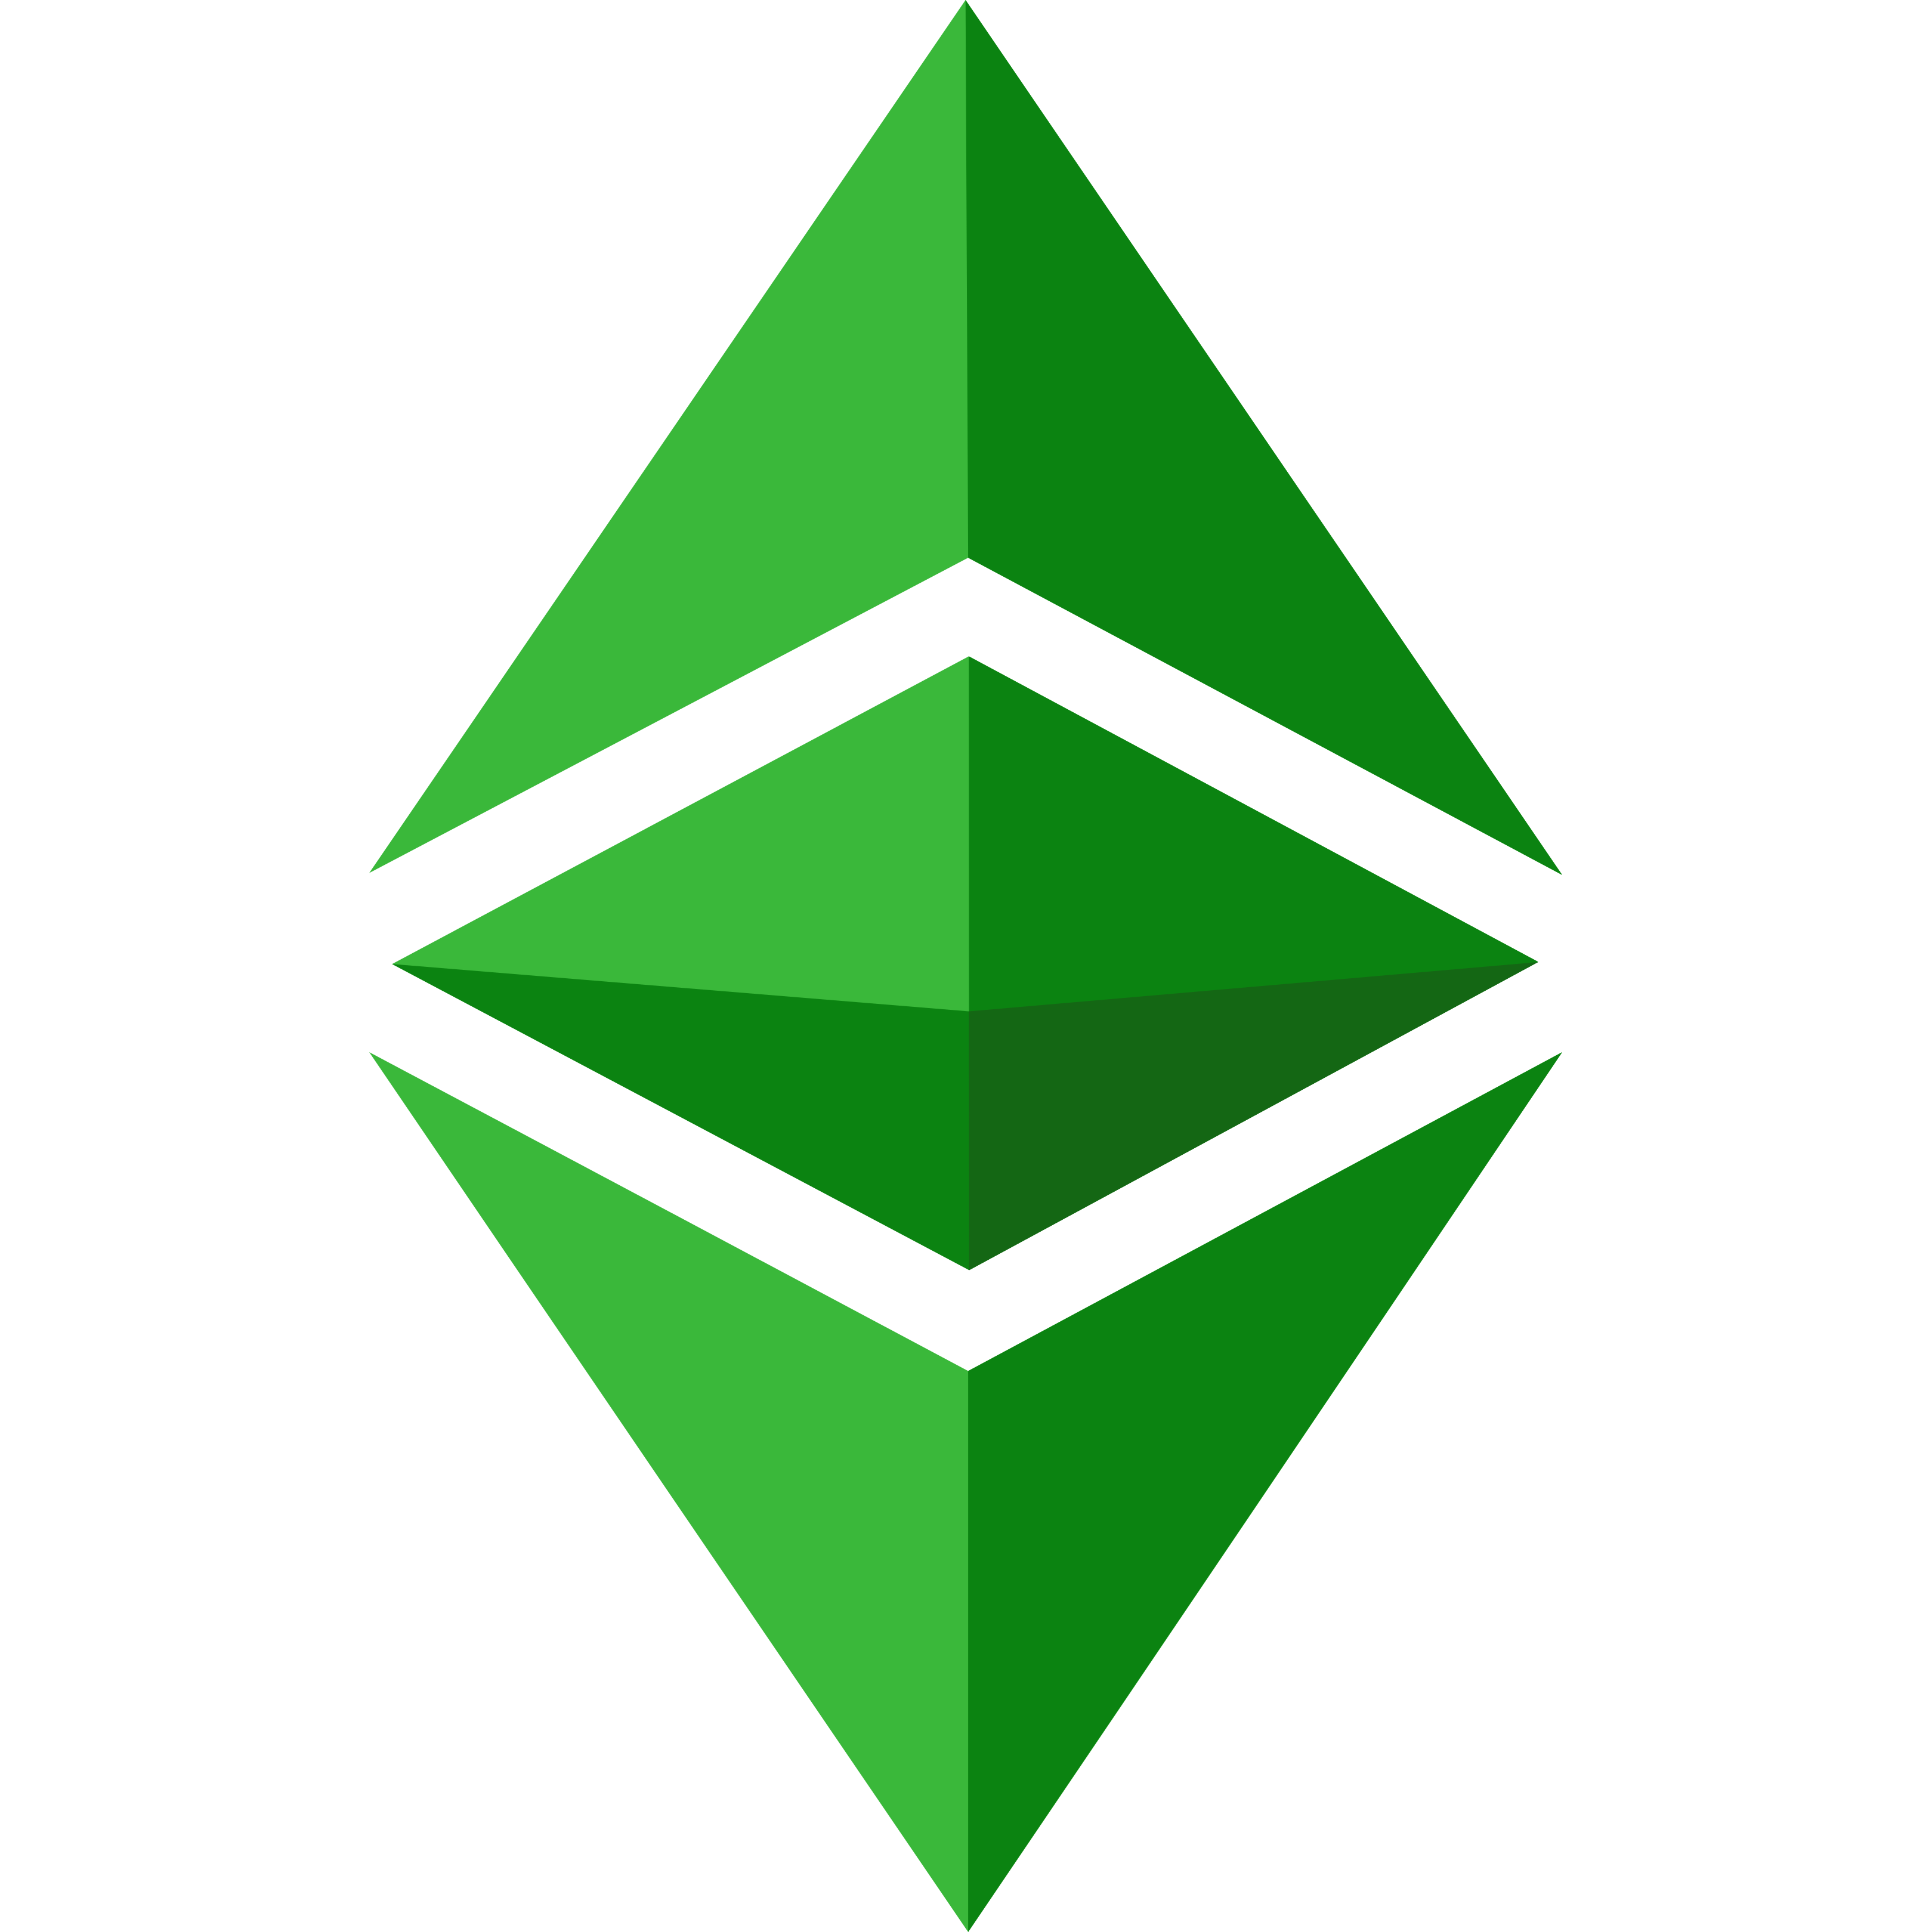 etc-logo